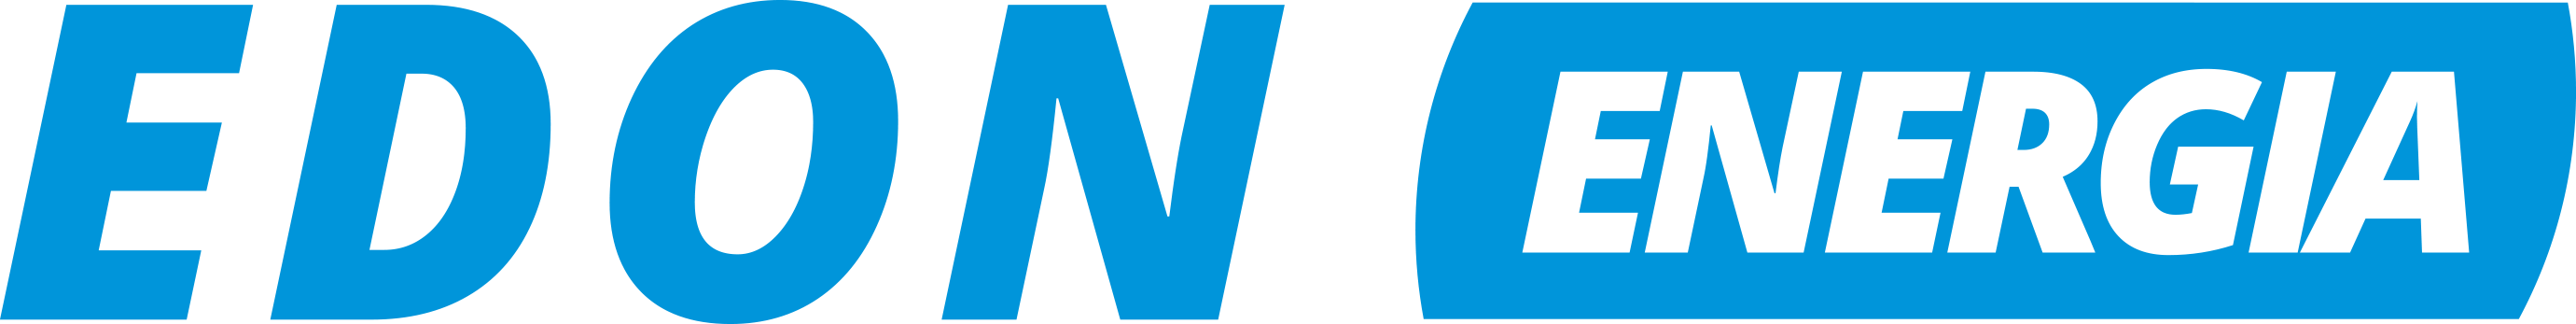 logo-poziom-kolor